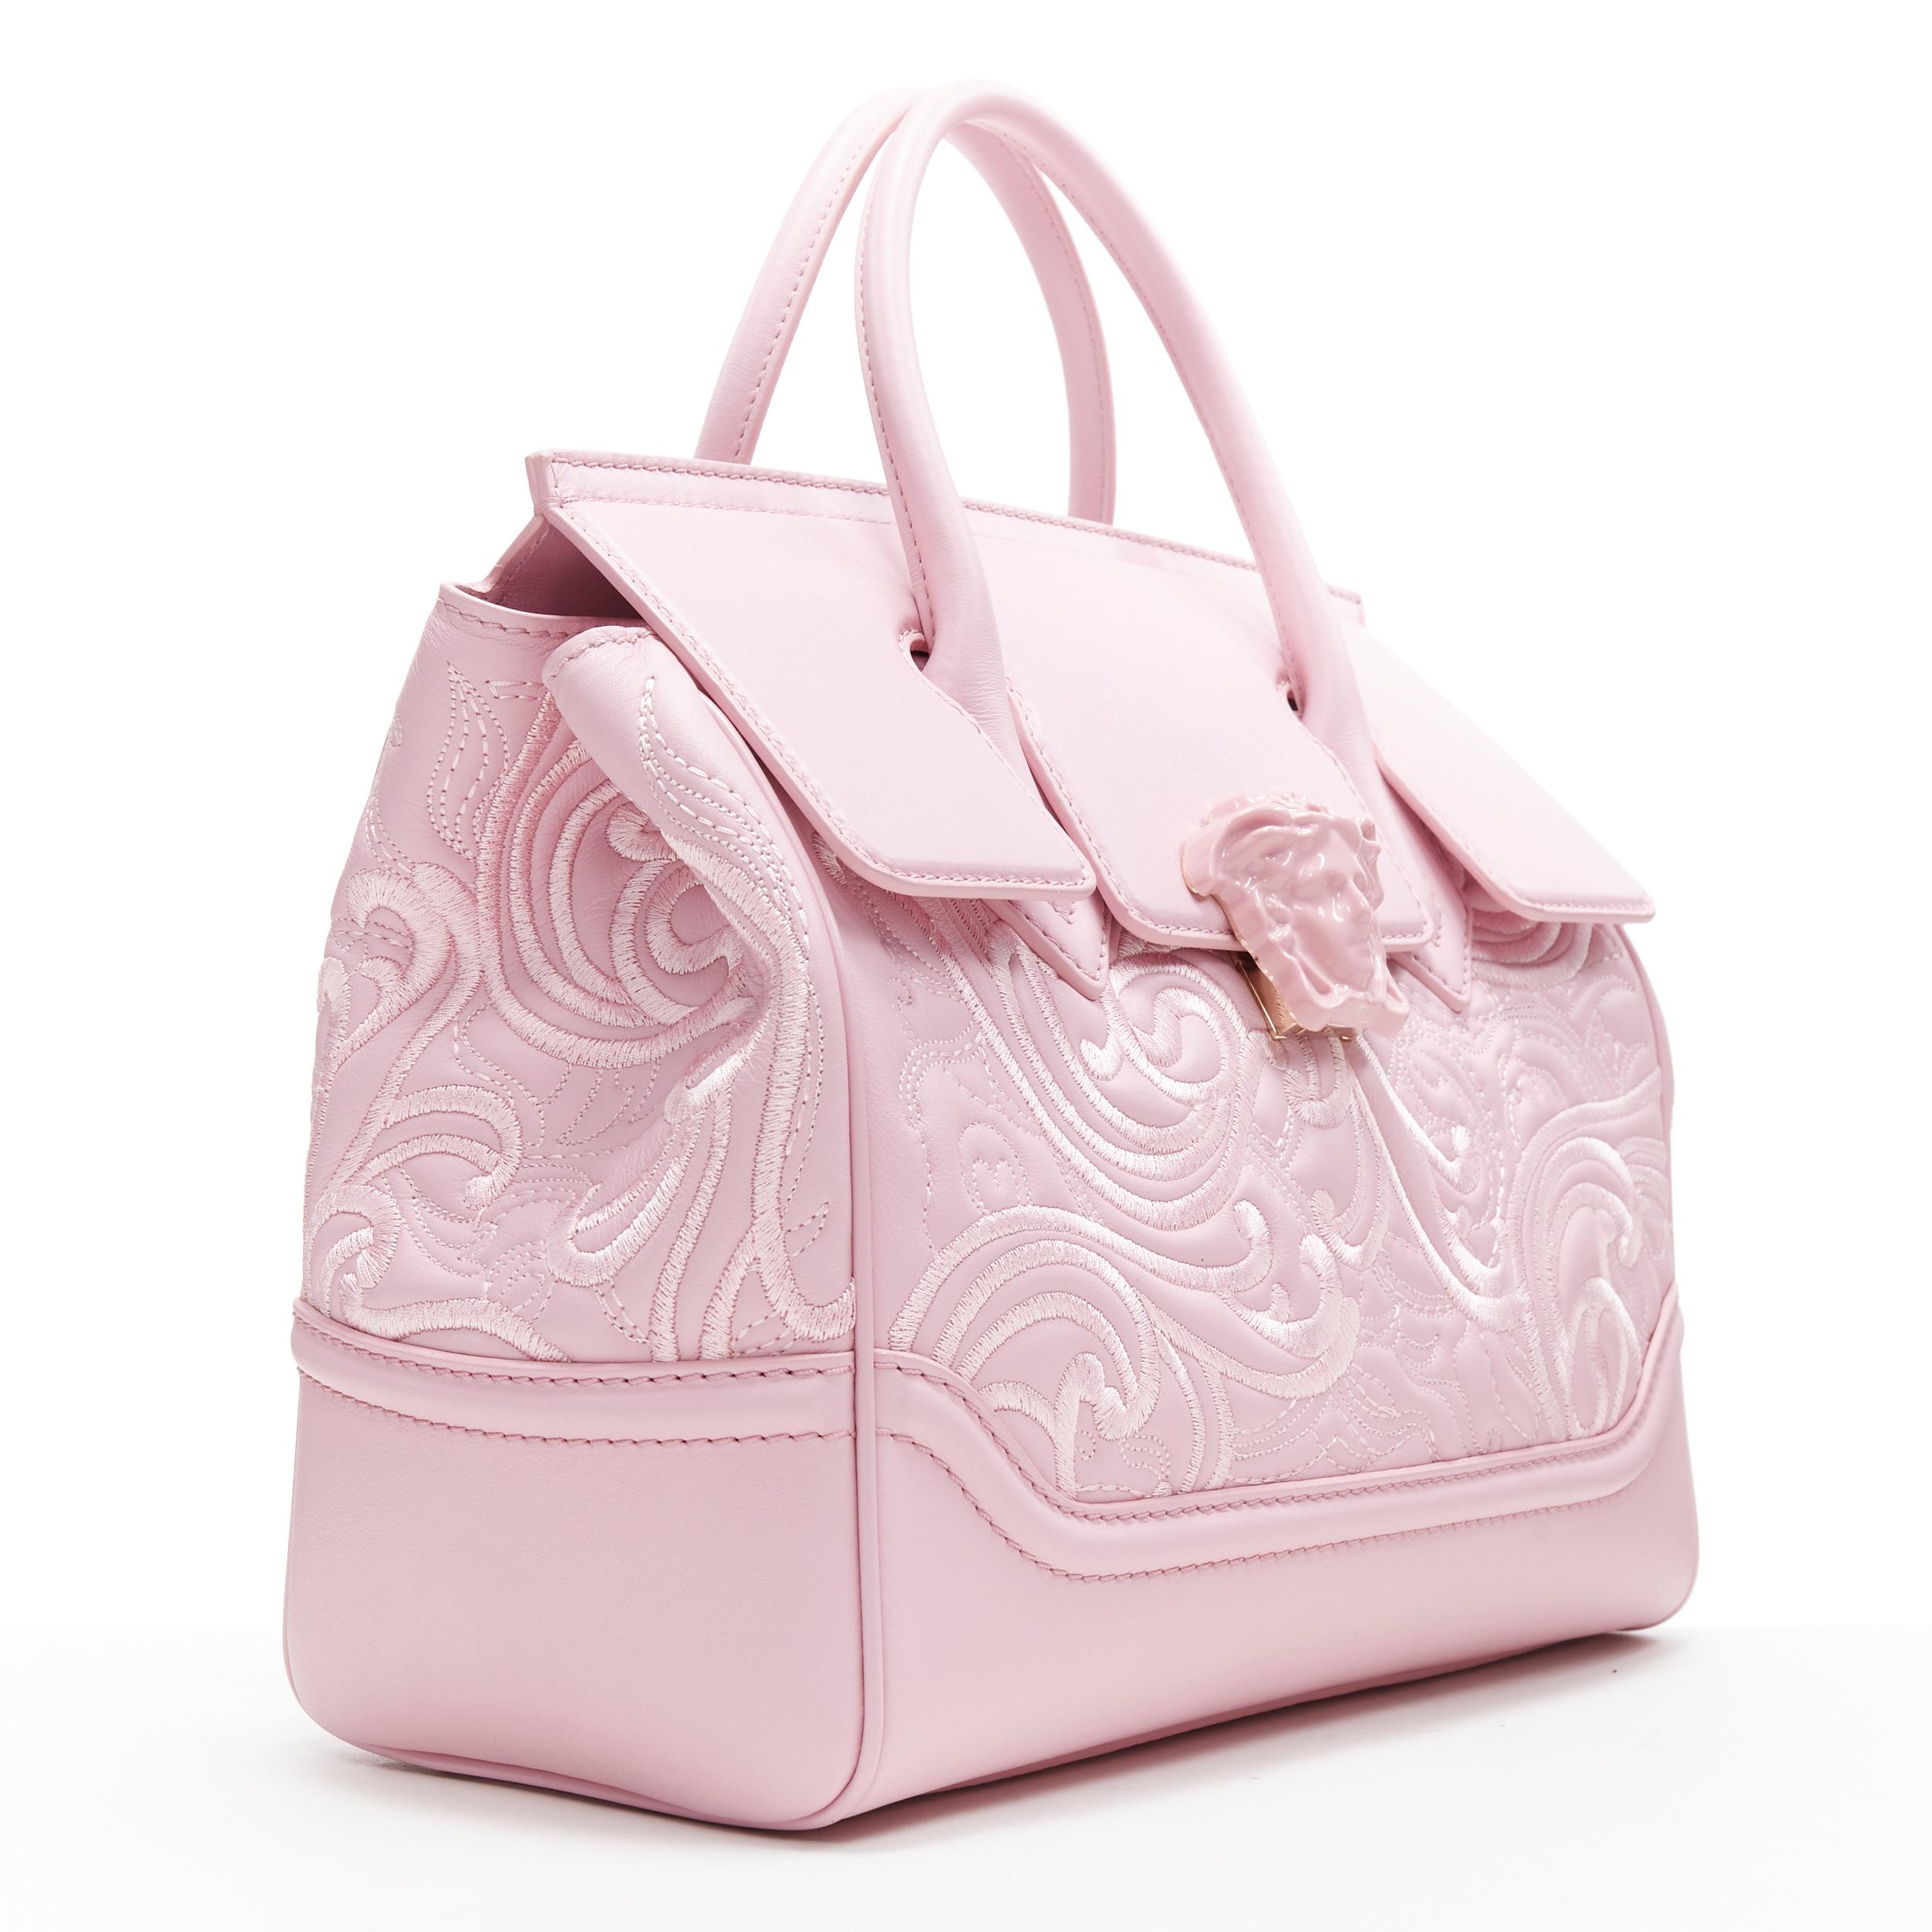 versace palazzo bag pink